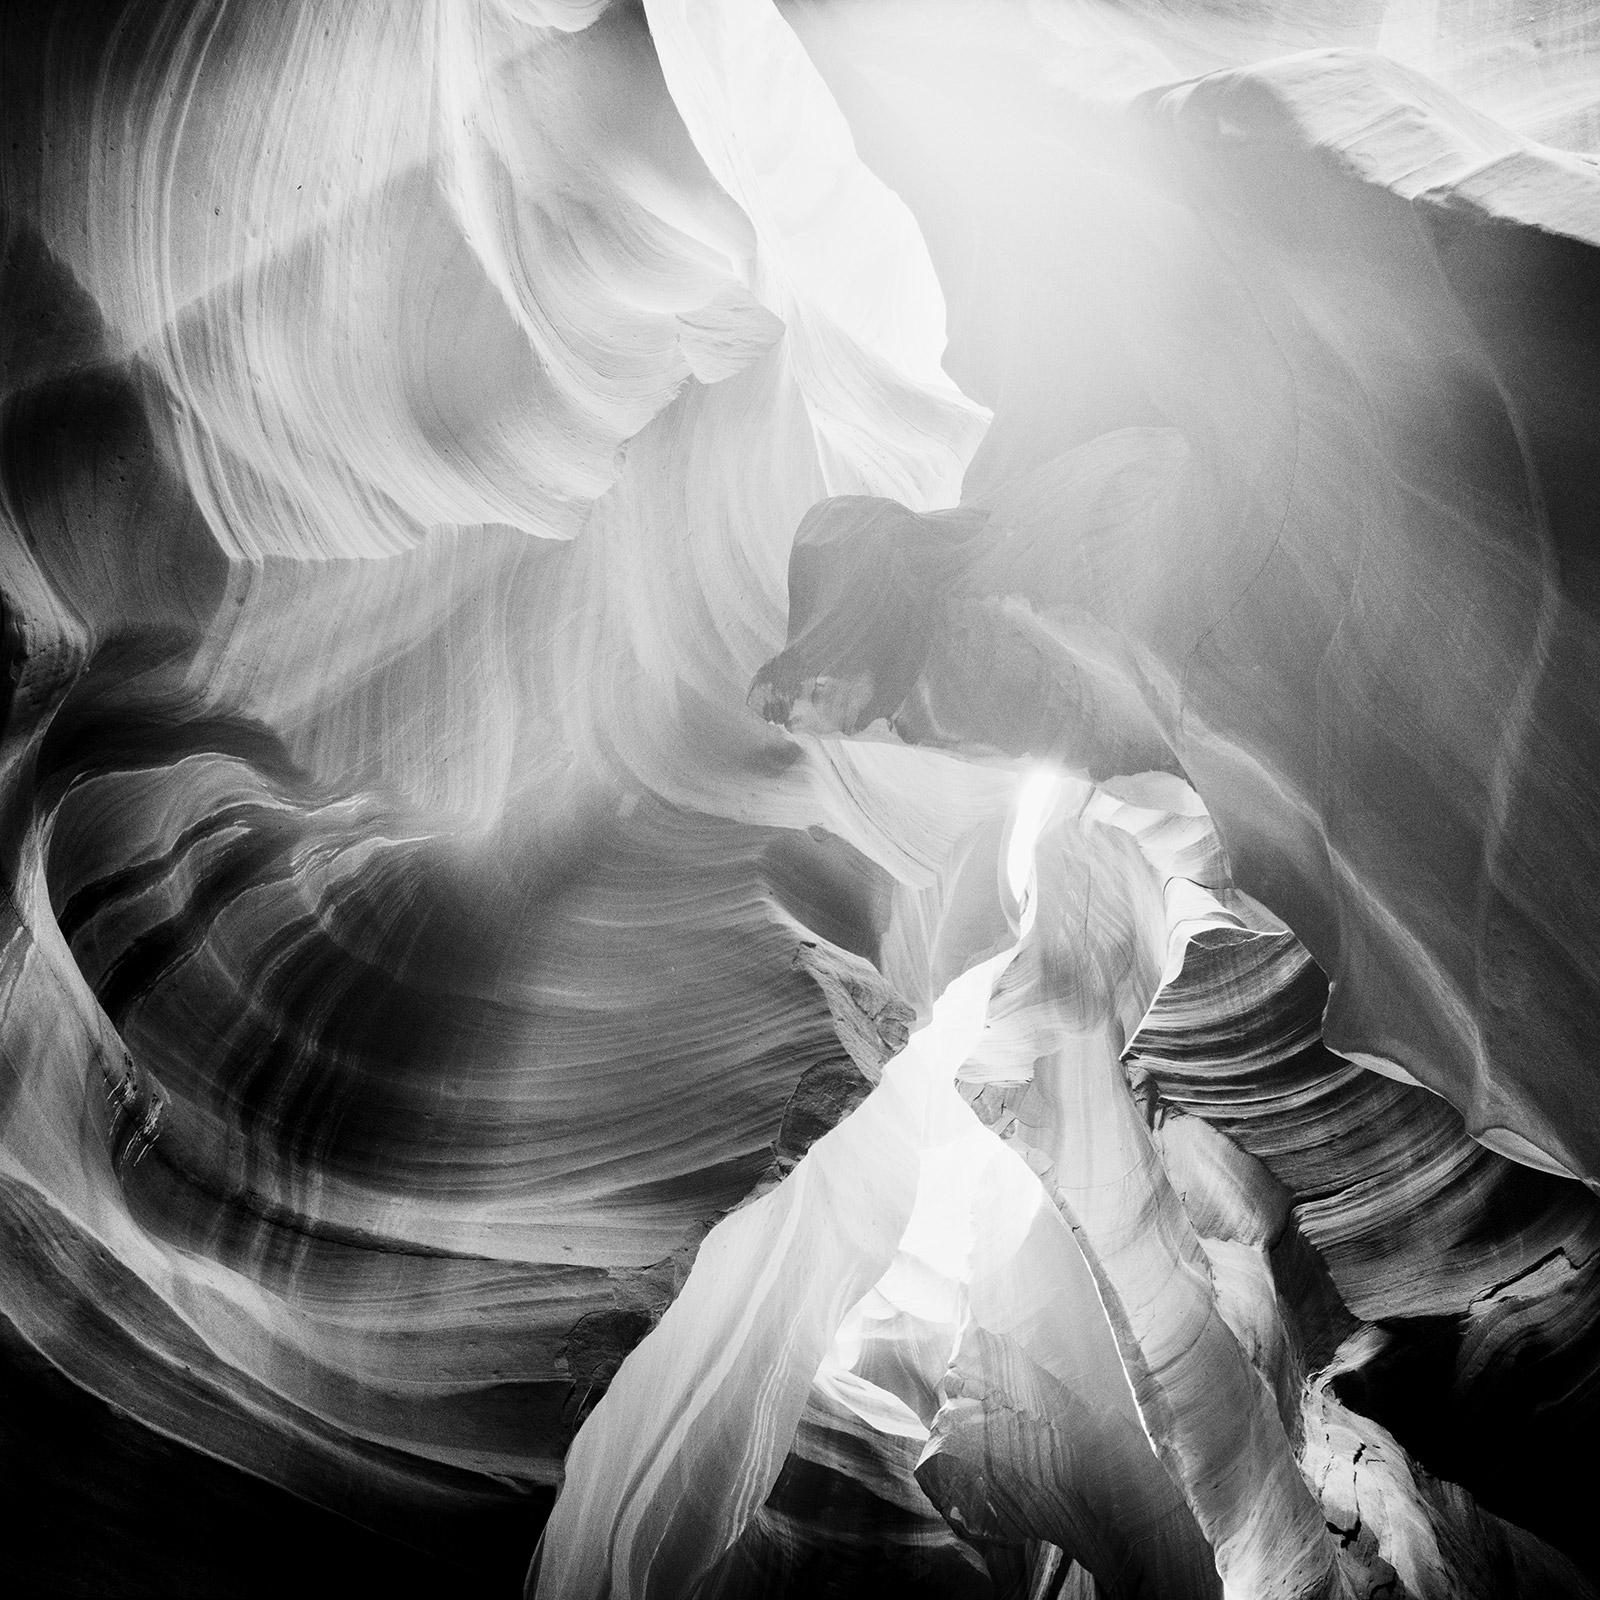 Black and White Photograph Gerald Berghammer - Antelope Canyon, Arizona, USA, photographie noir et blanc, abstrait, paysage